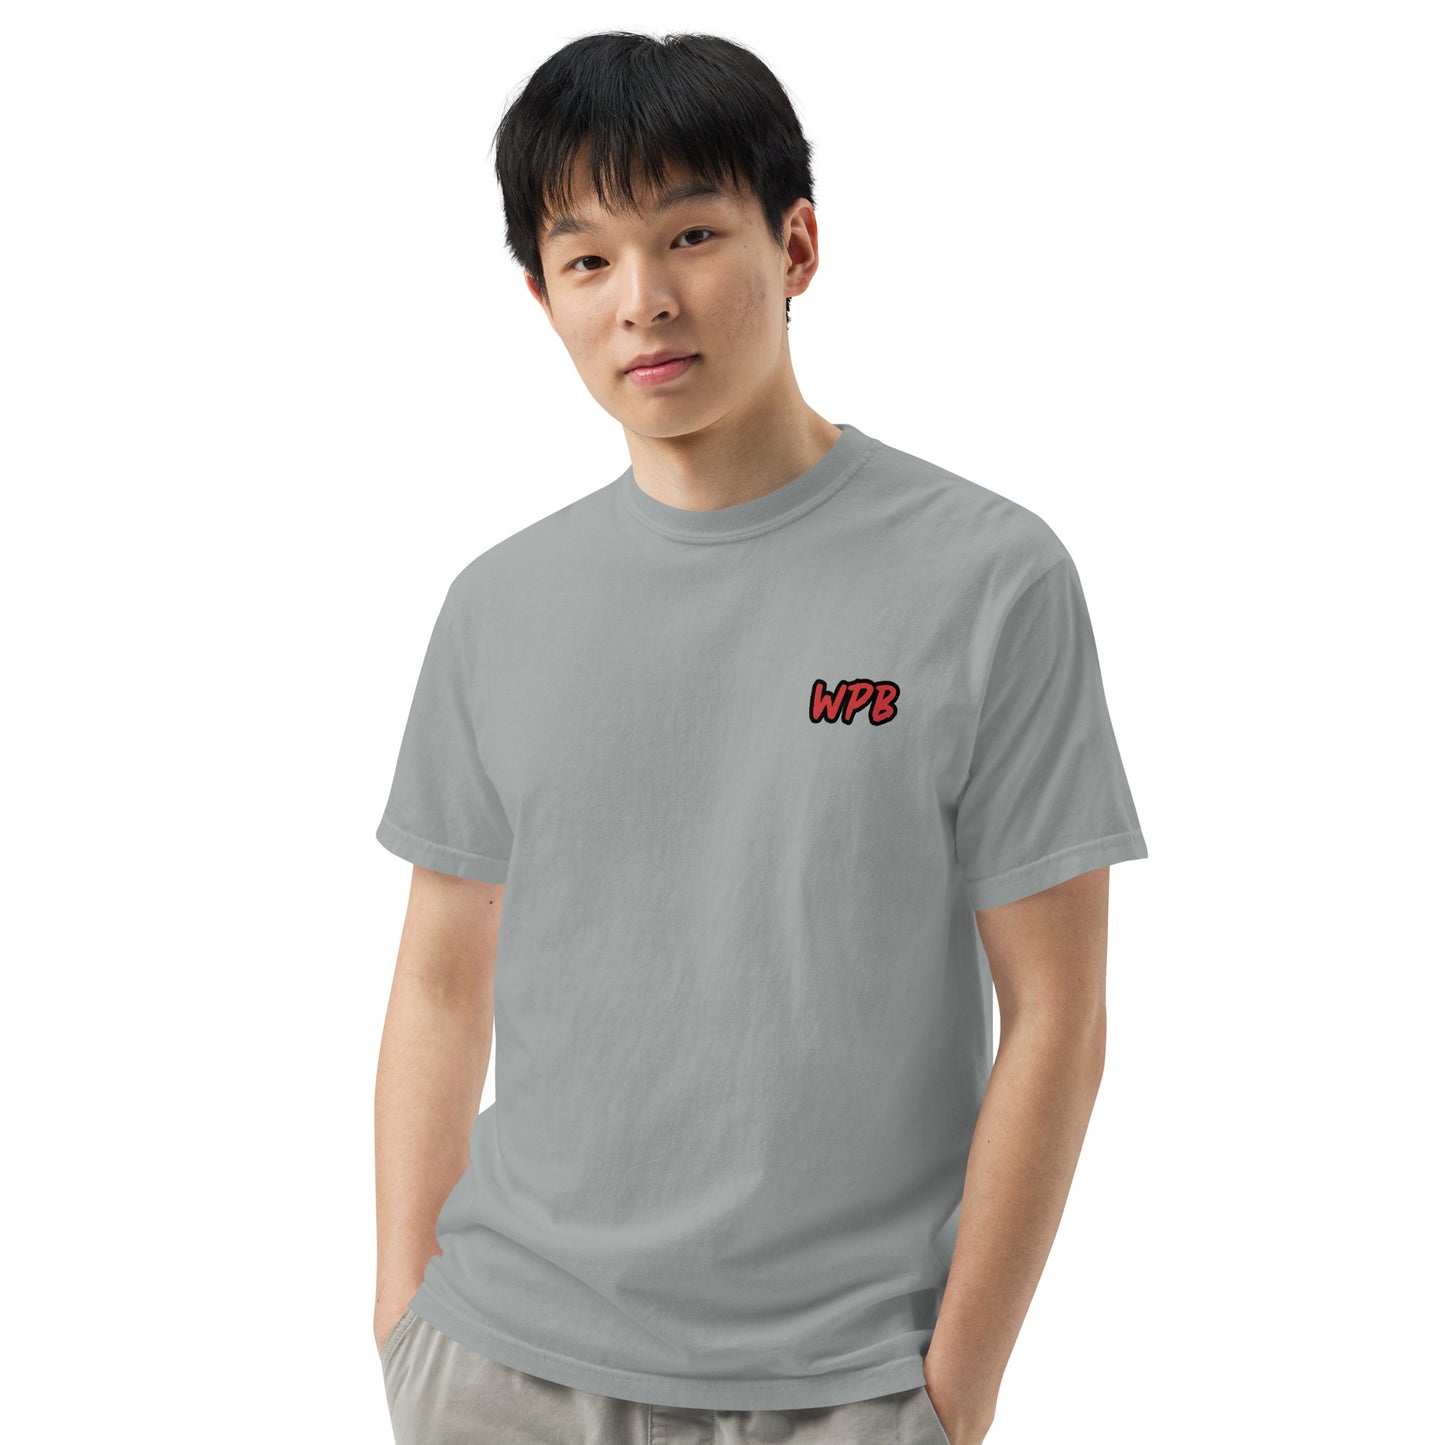 Woo Pig Comfort Colors T-Shirt